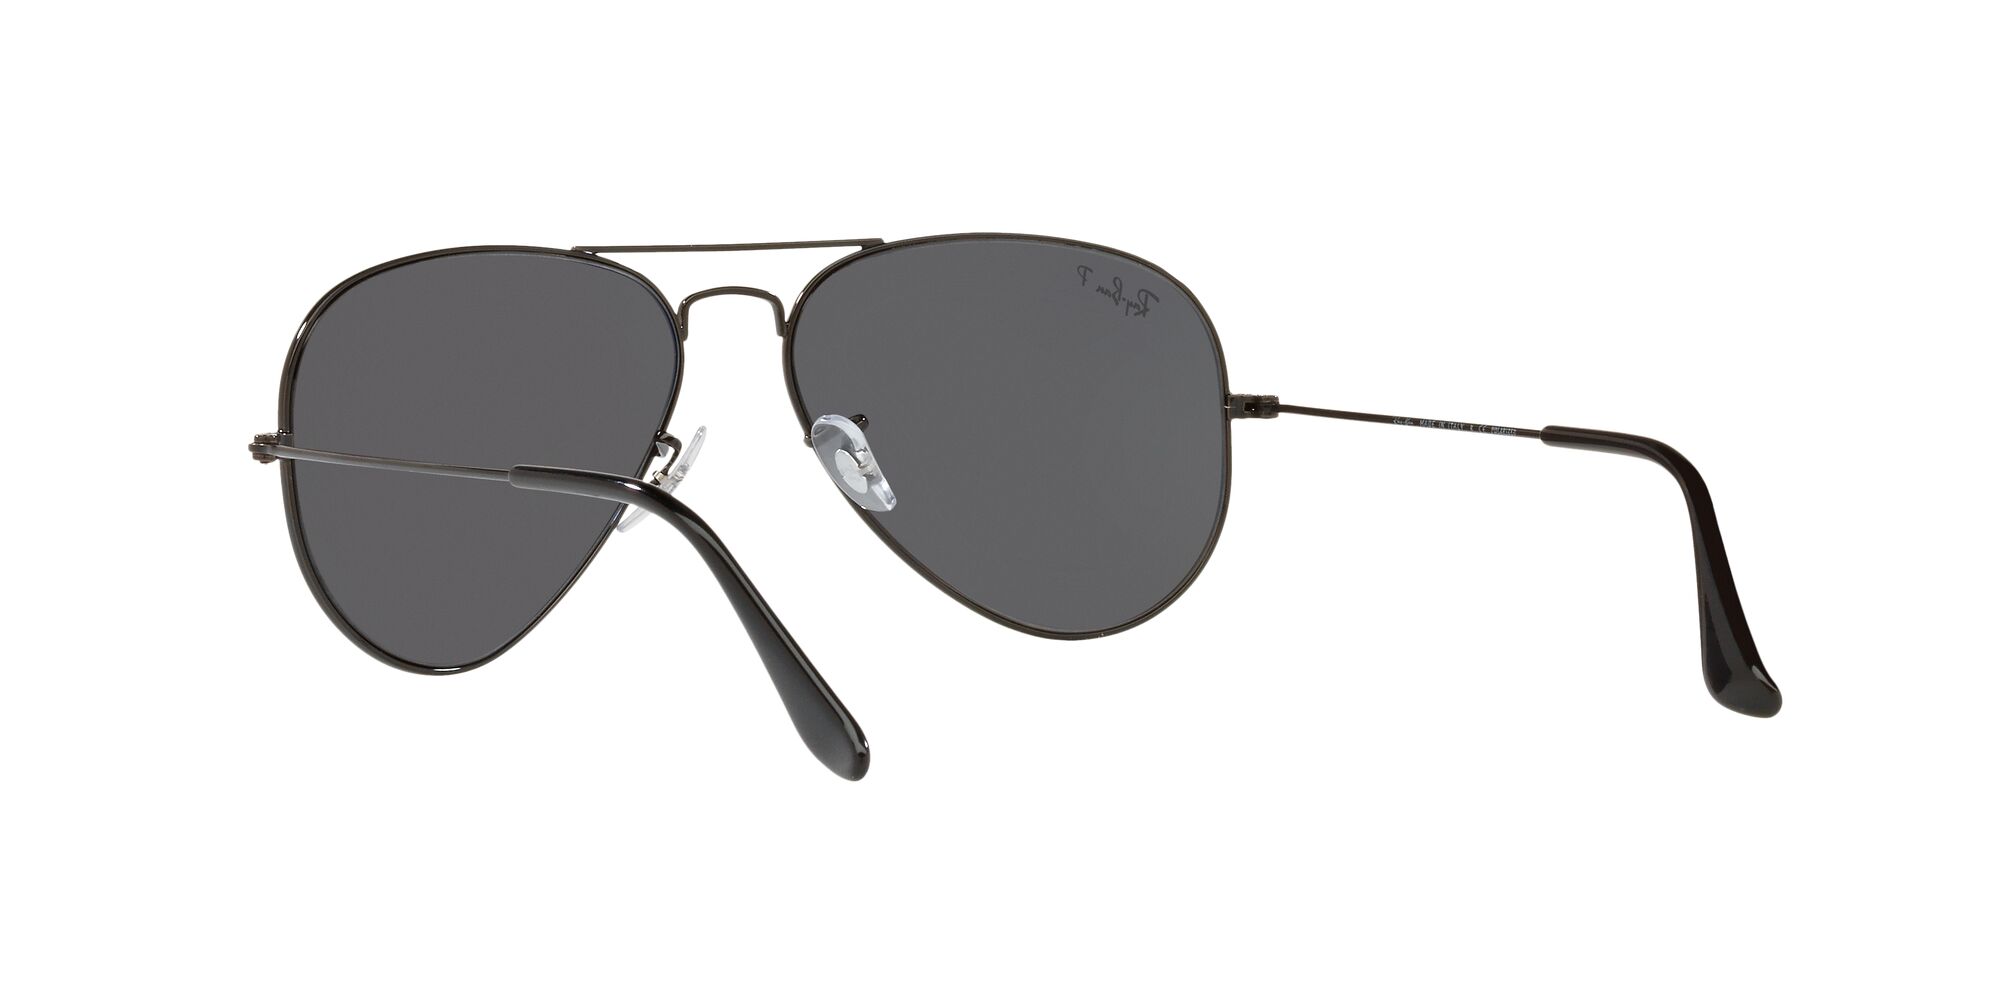 Buy joe black Aviator Sunglasses (Matte Black) (JB-016|C3) at Amazon.in